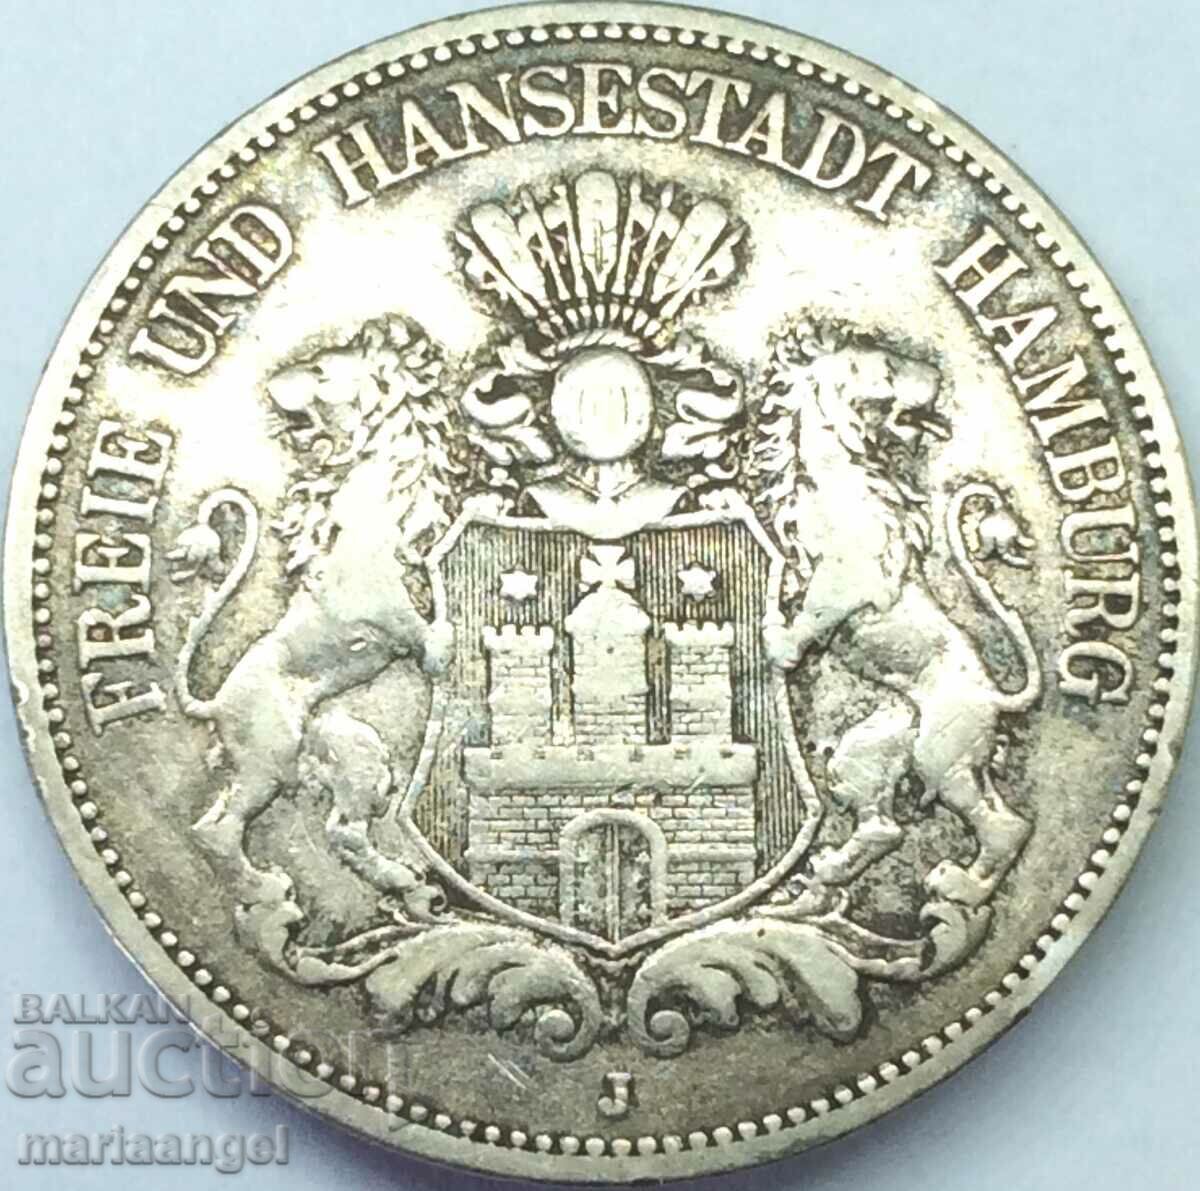 Germany 5 stamps 1875 Hamburg 27.45g silver